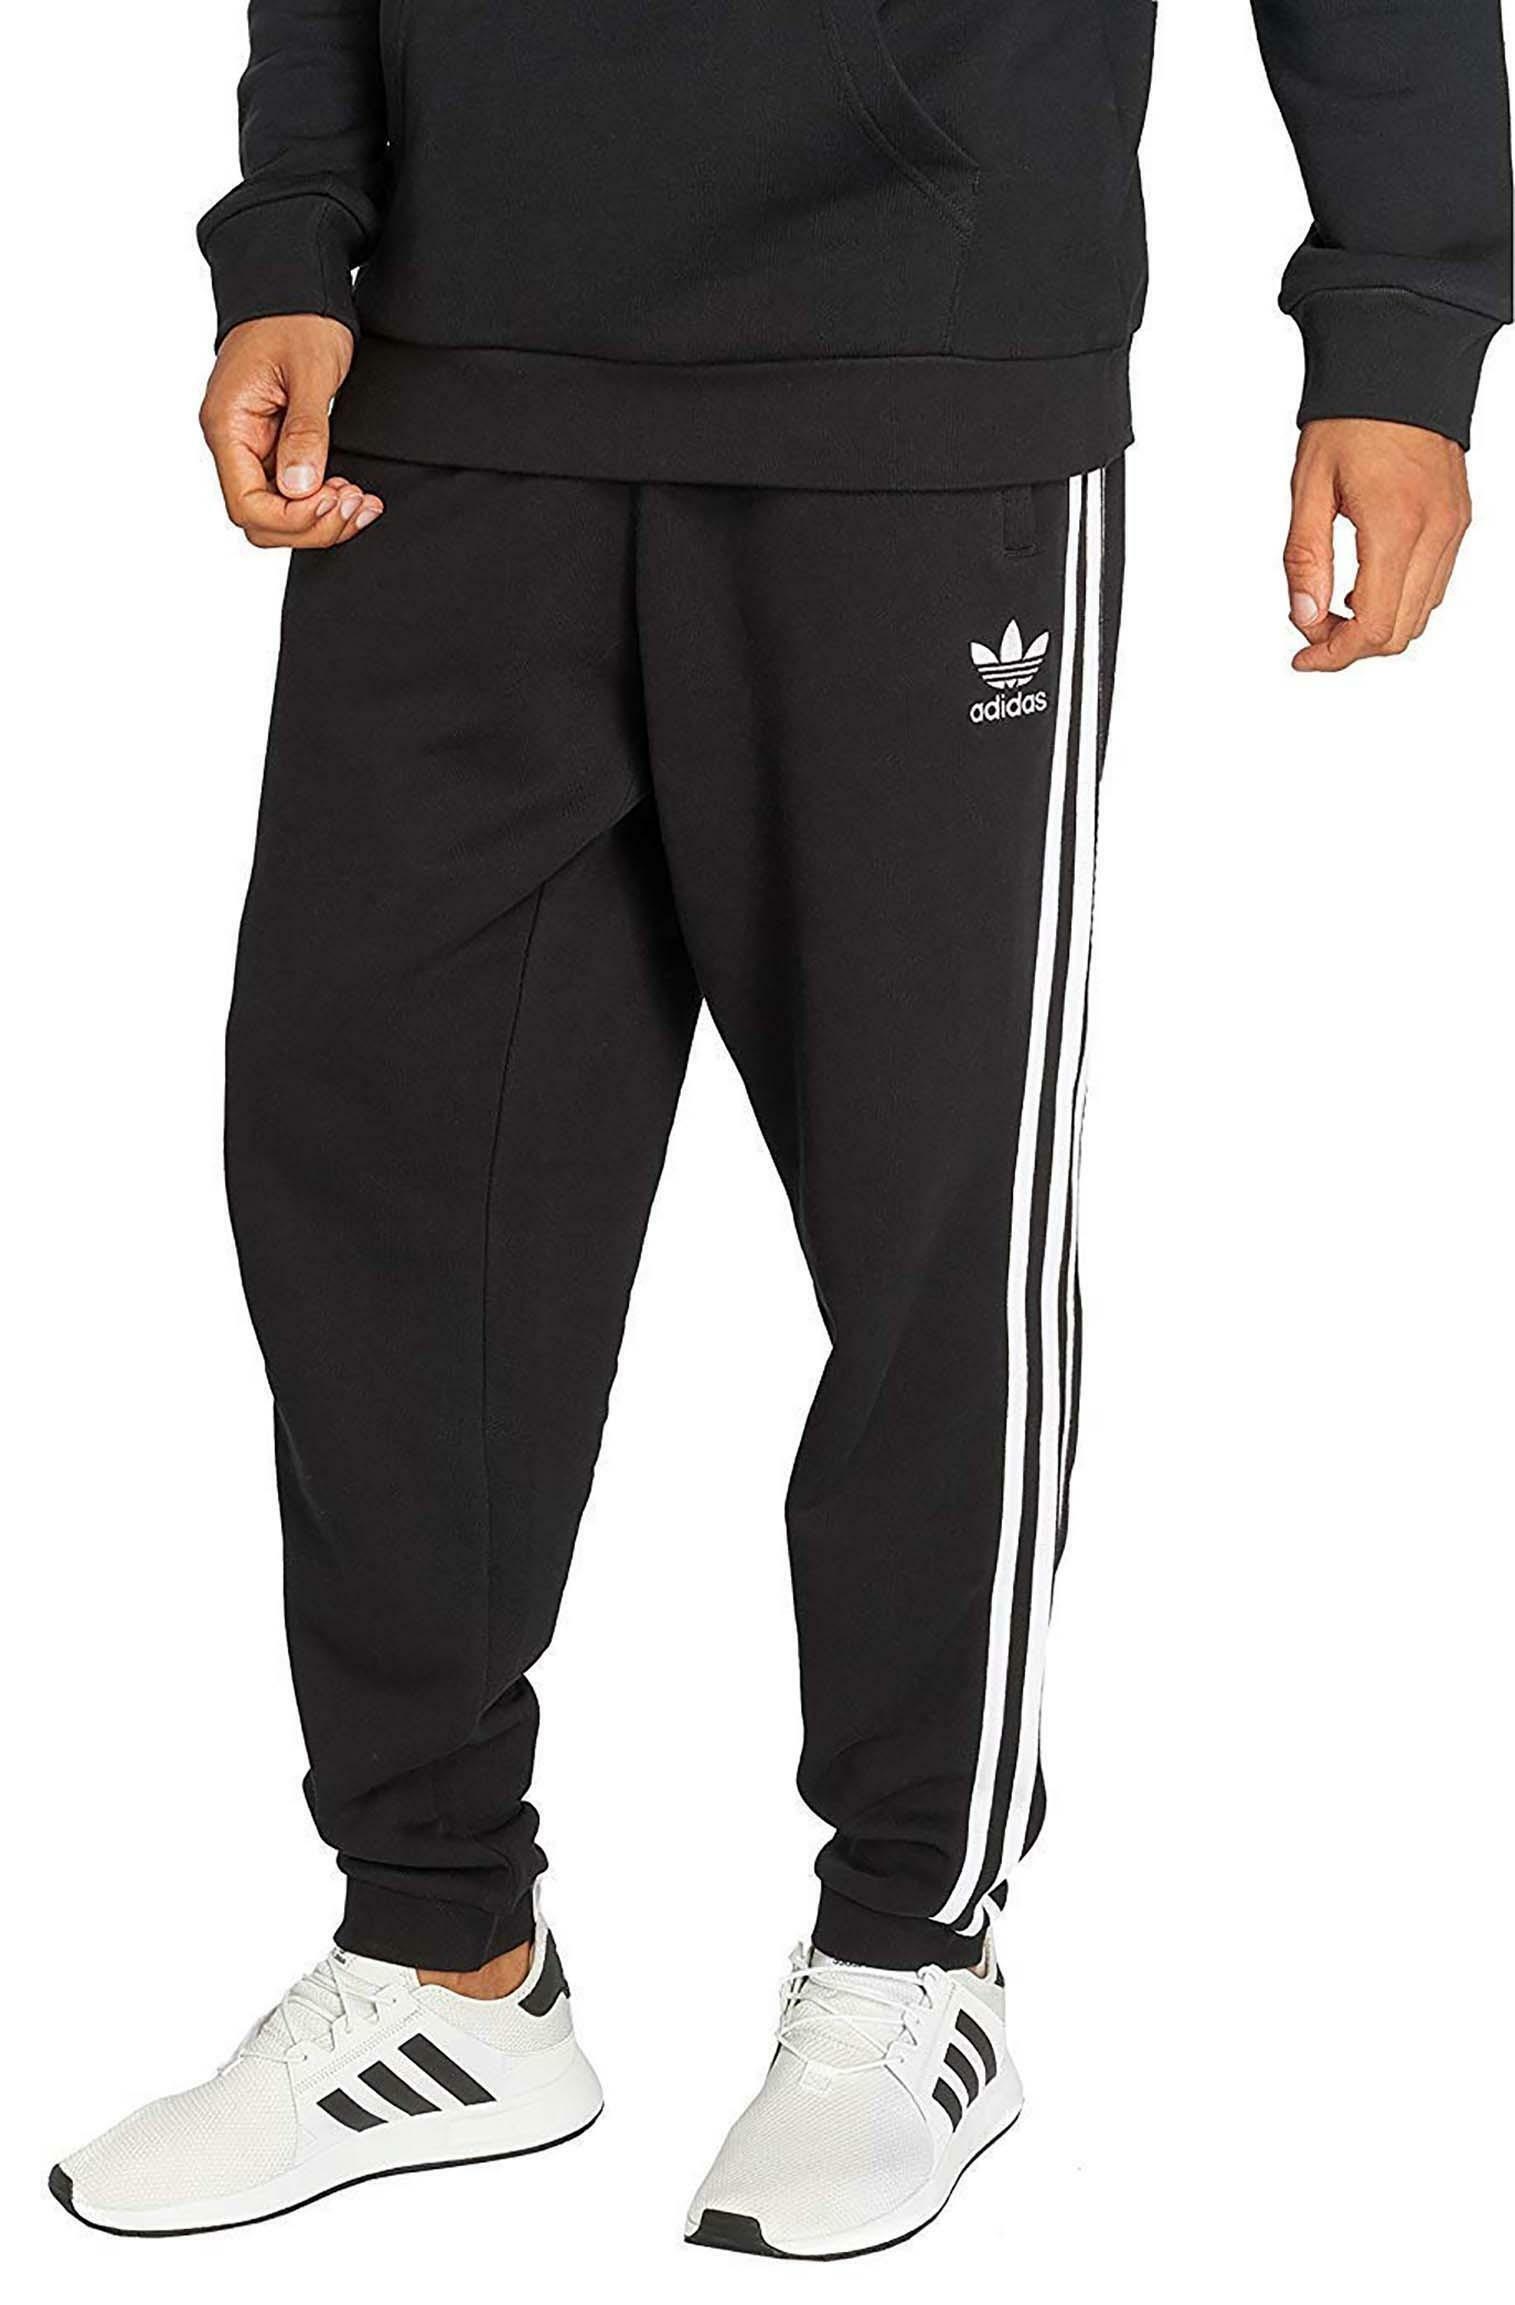 Adidas 3 stripes pantaloni cotone garzato uomo nero dh5801